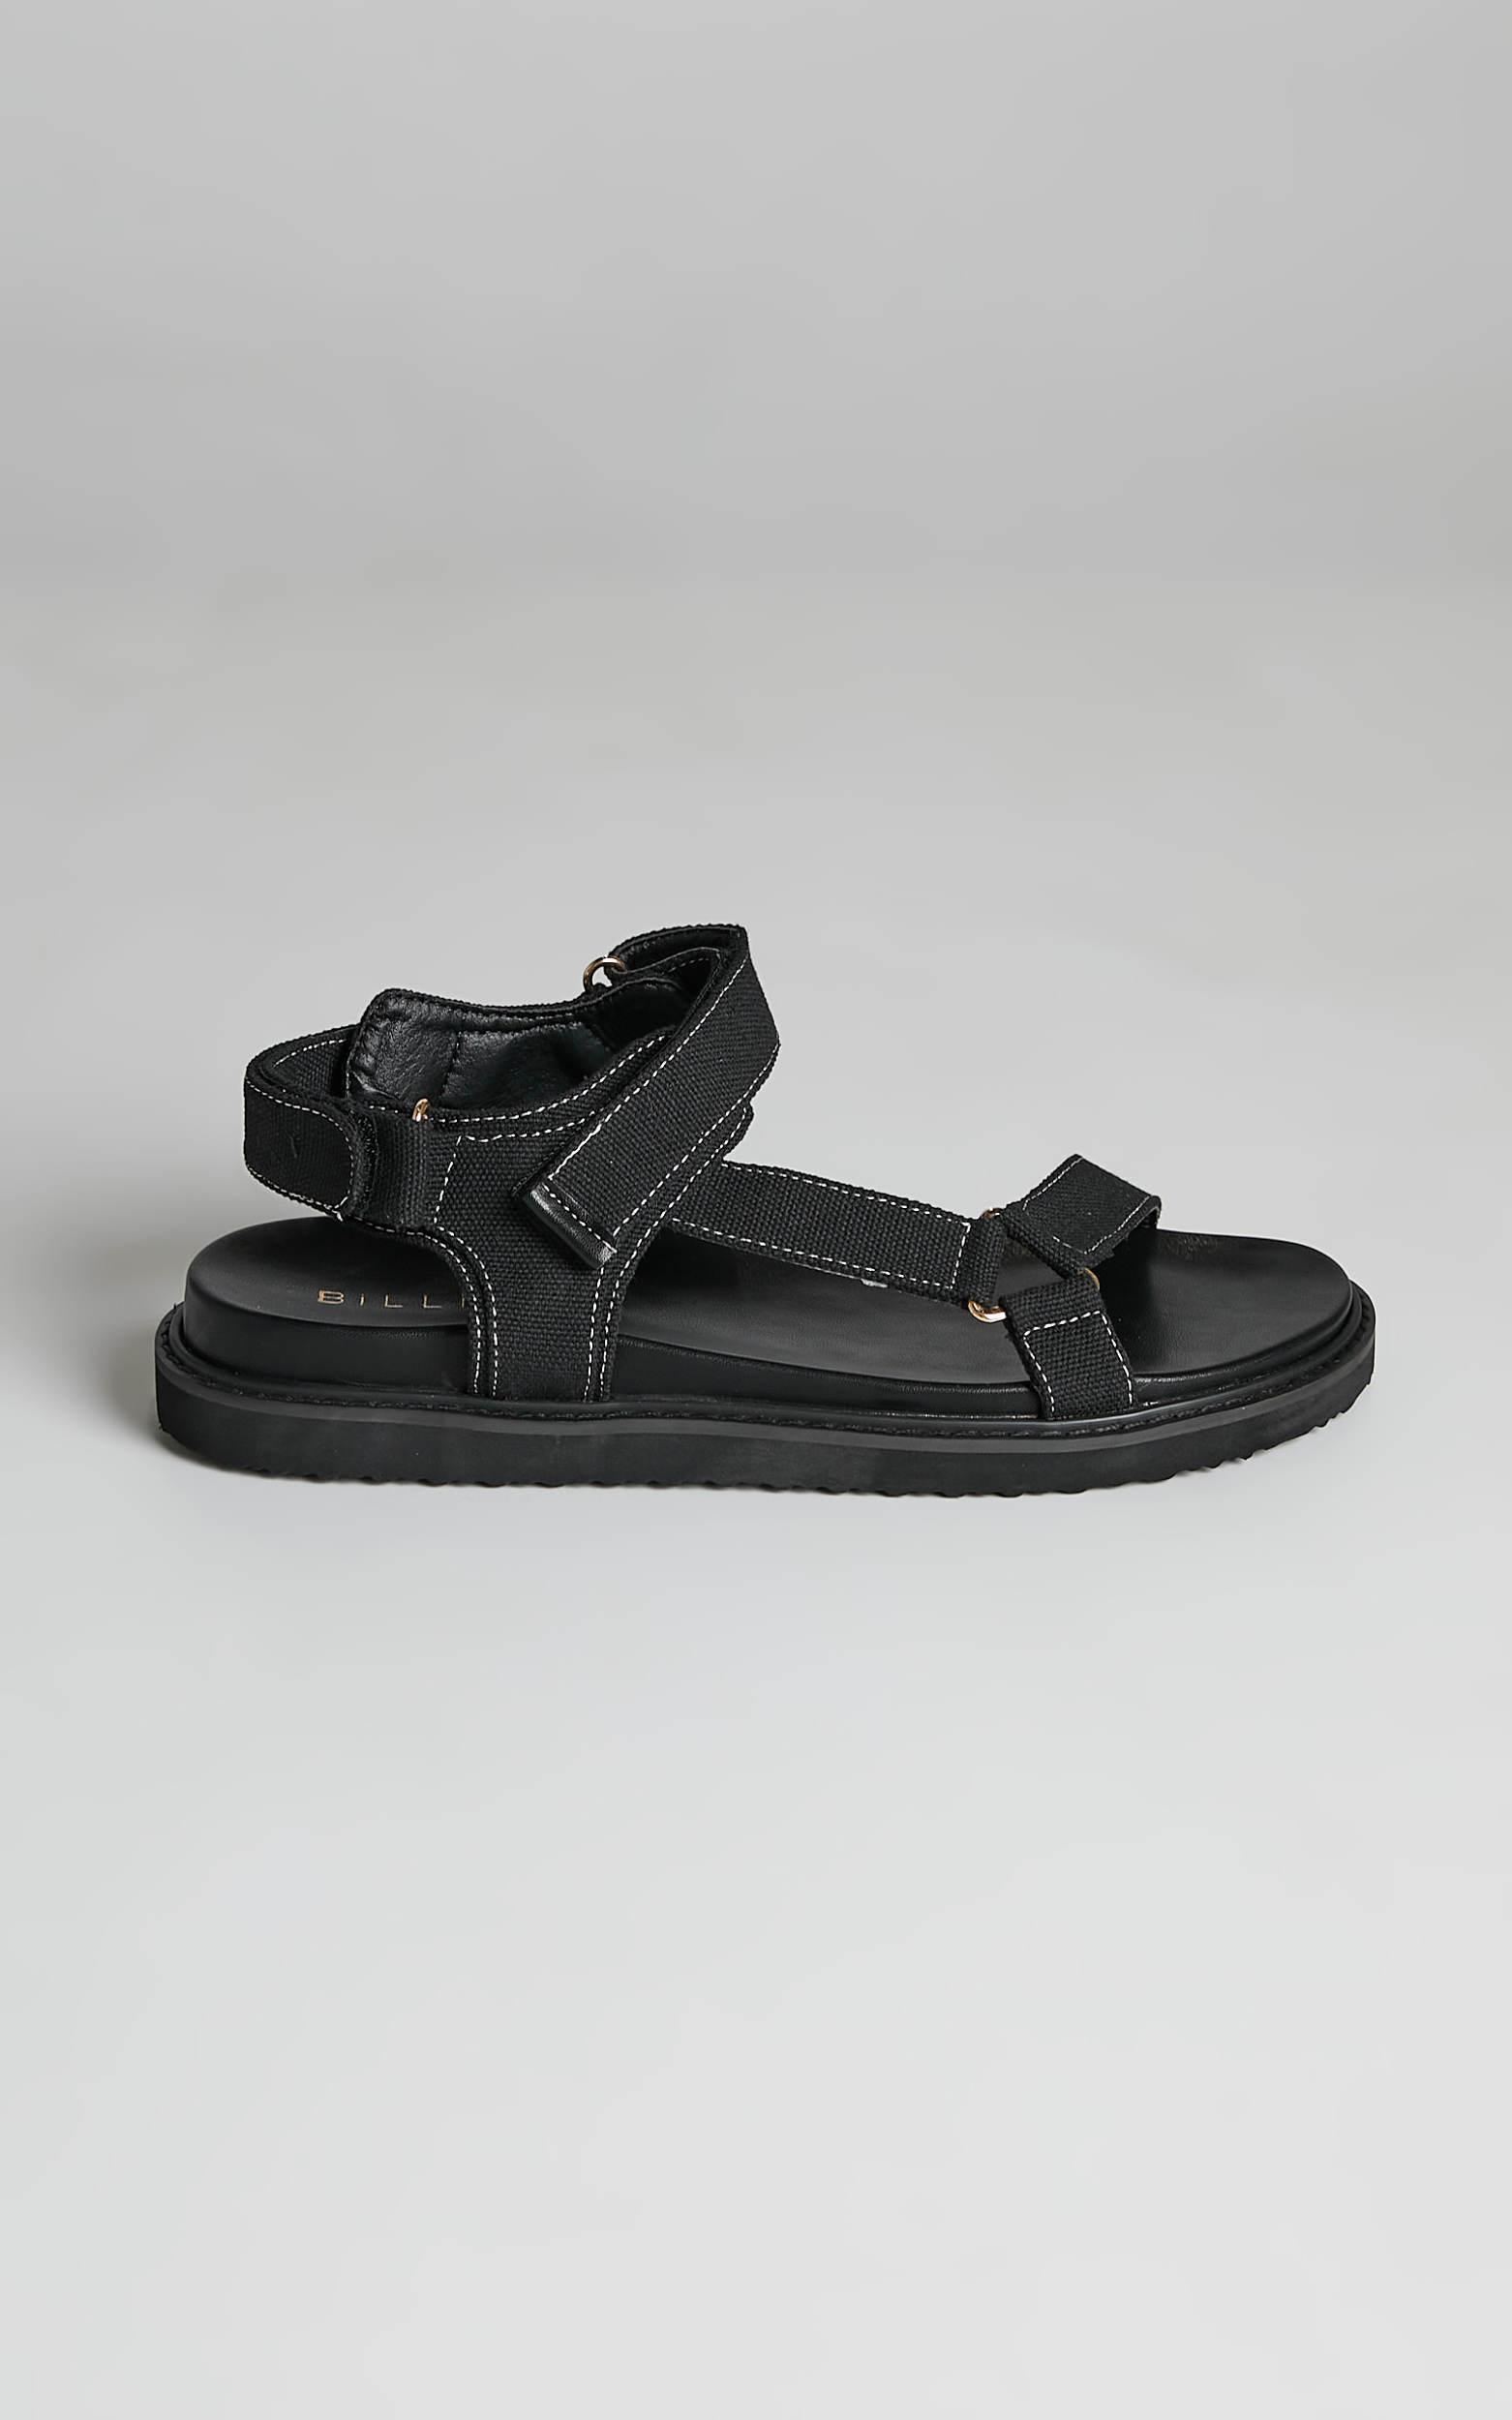 Billini - Zahara Sandals in Black Canvas - 05, BLK1, hi-res image number null